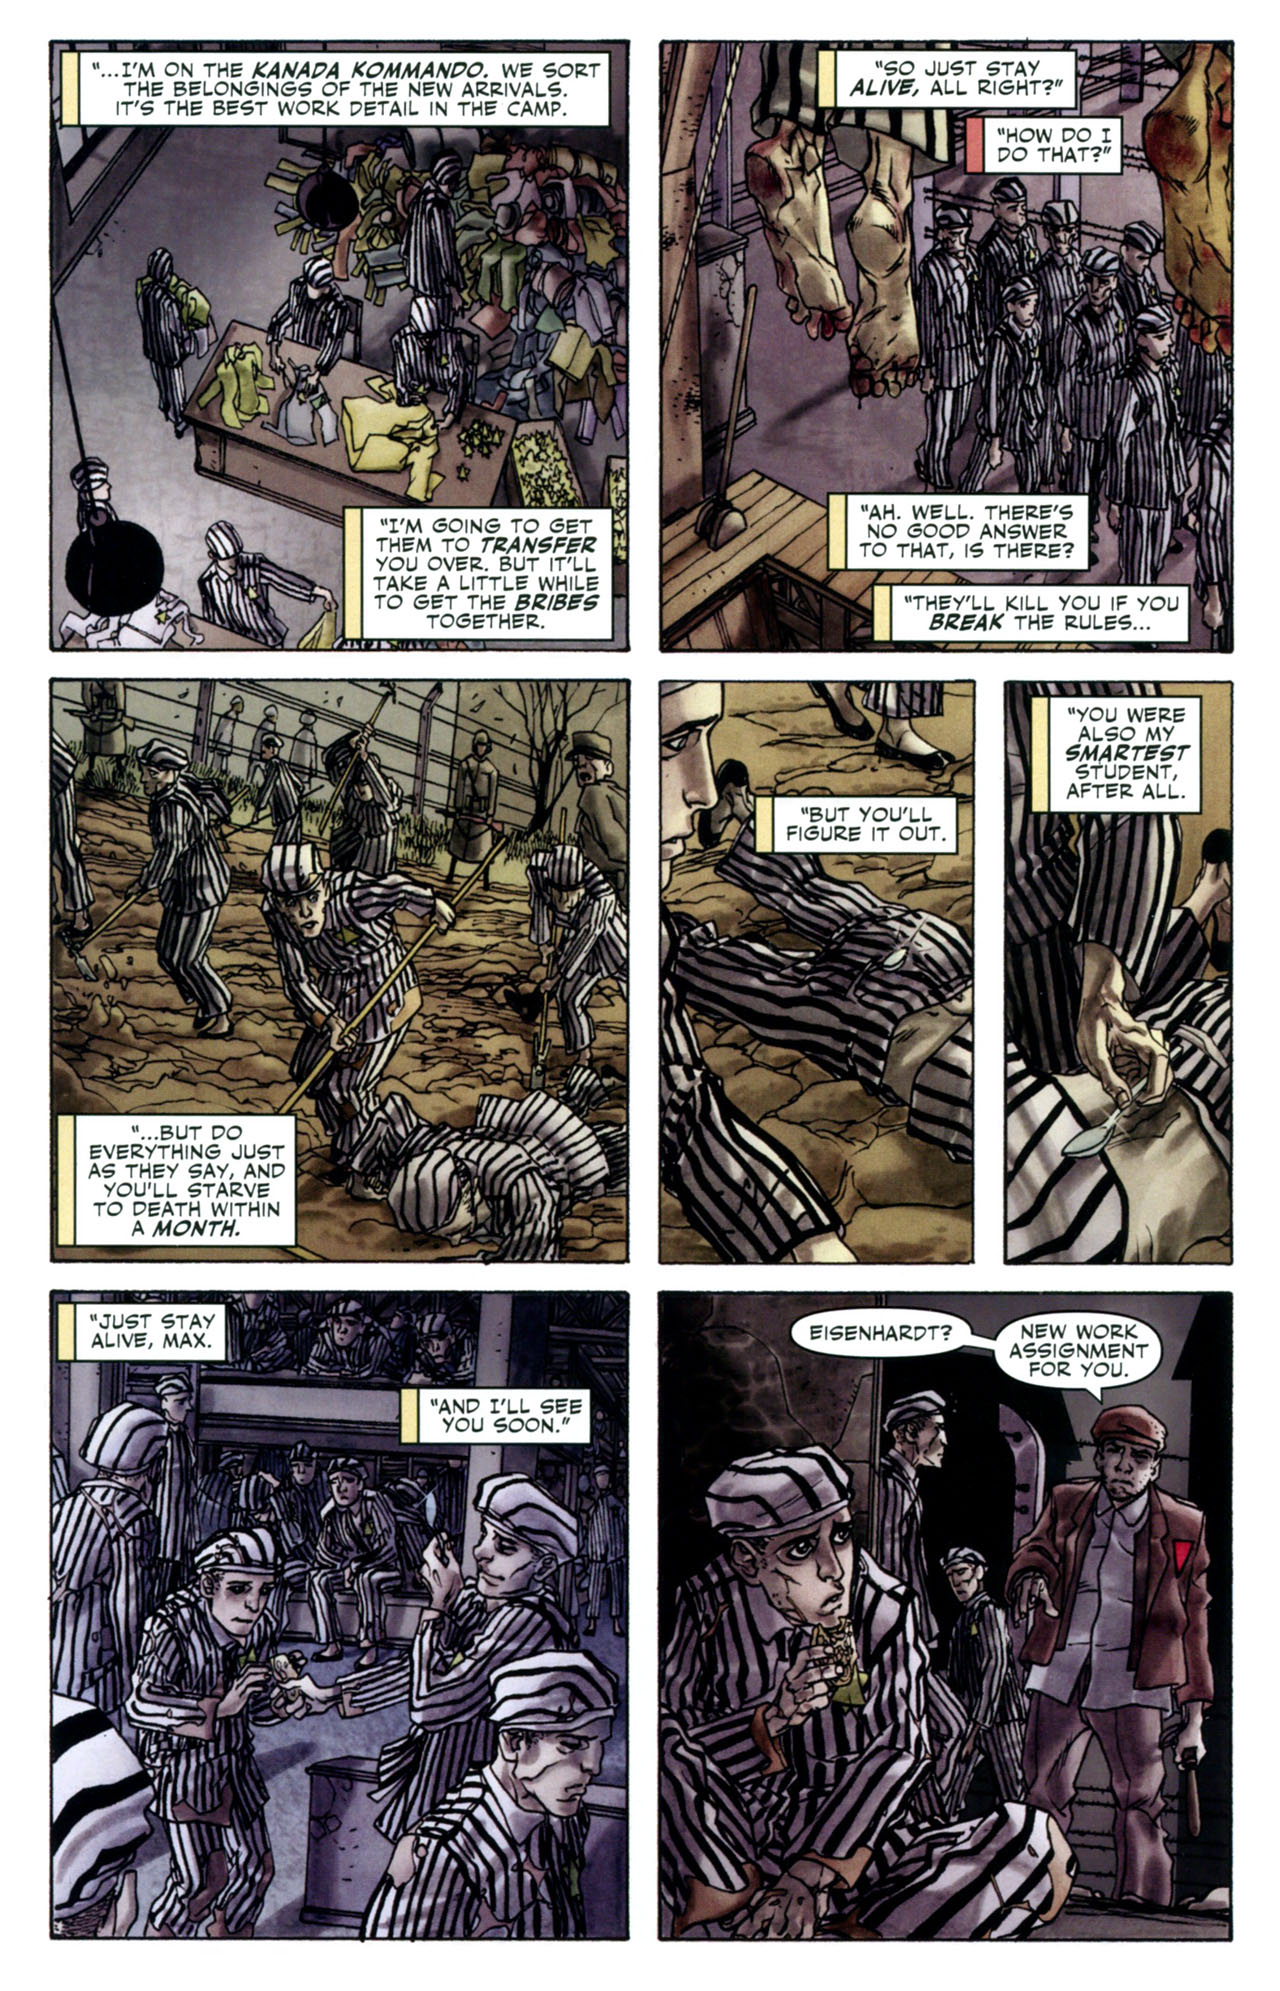 X-Men: Magneto Testament #4 - Part 4 of 5 